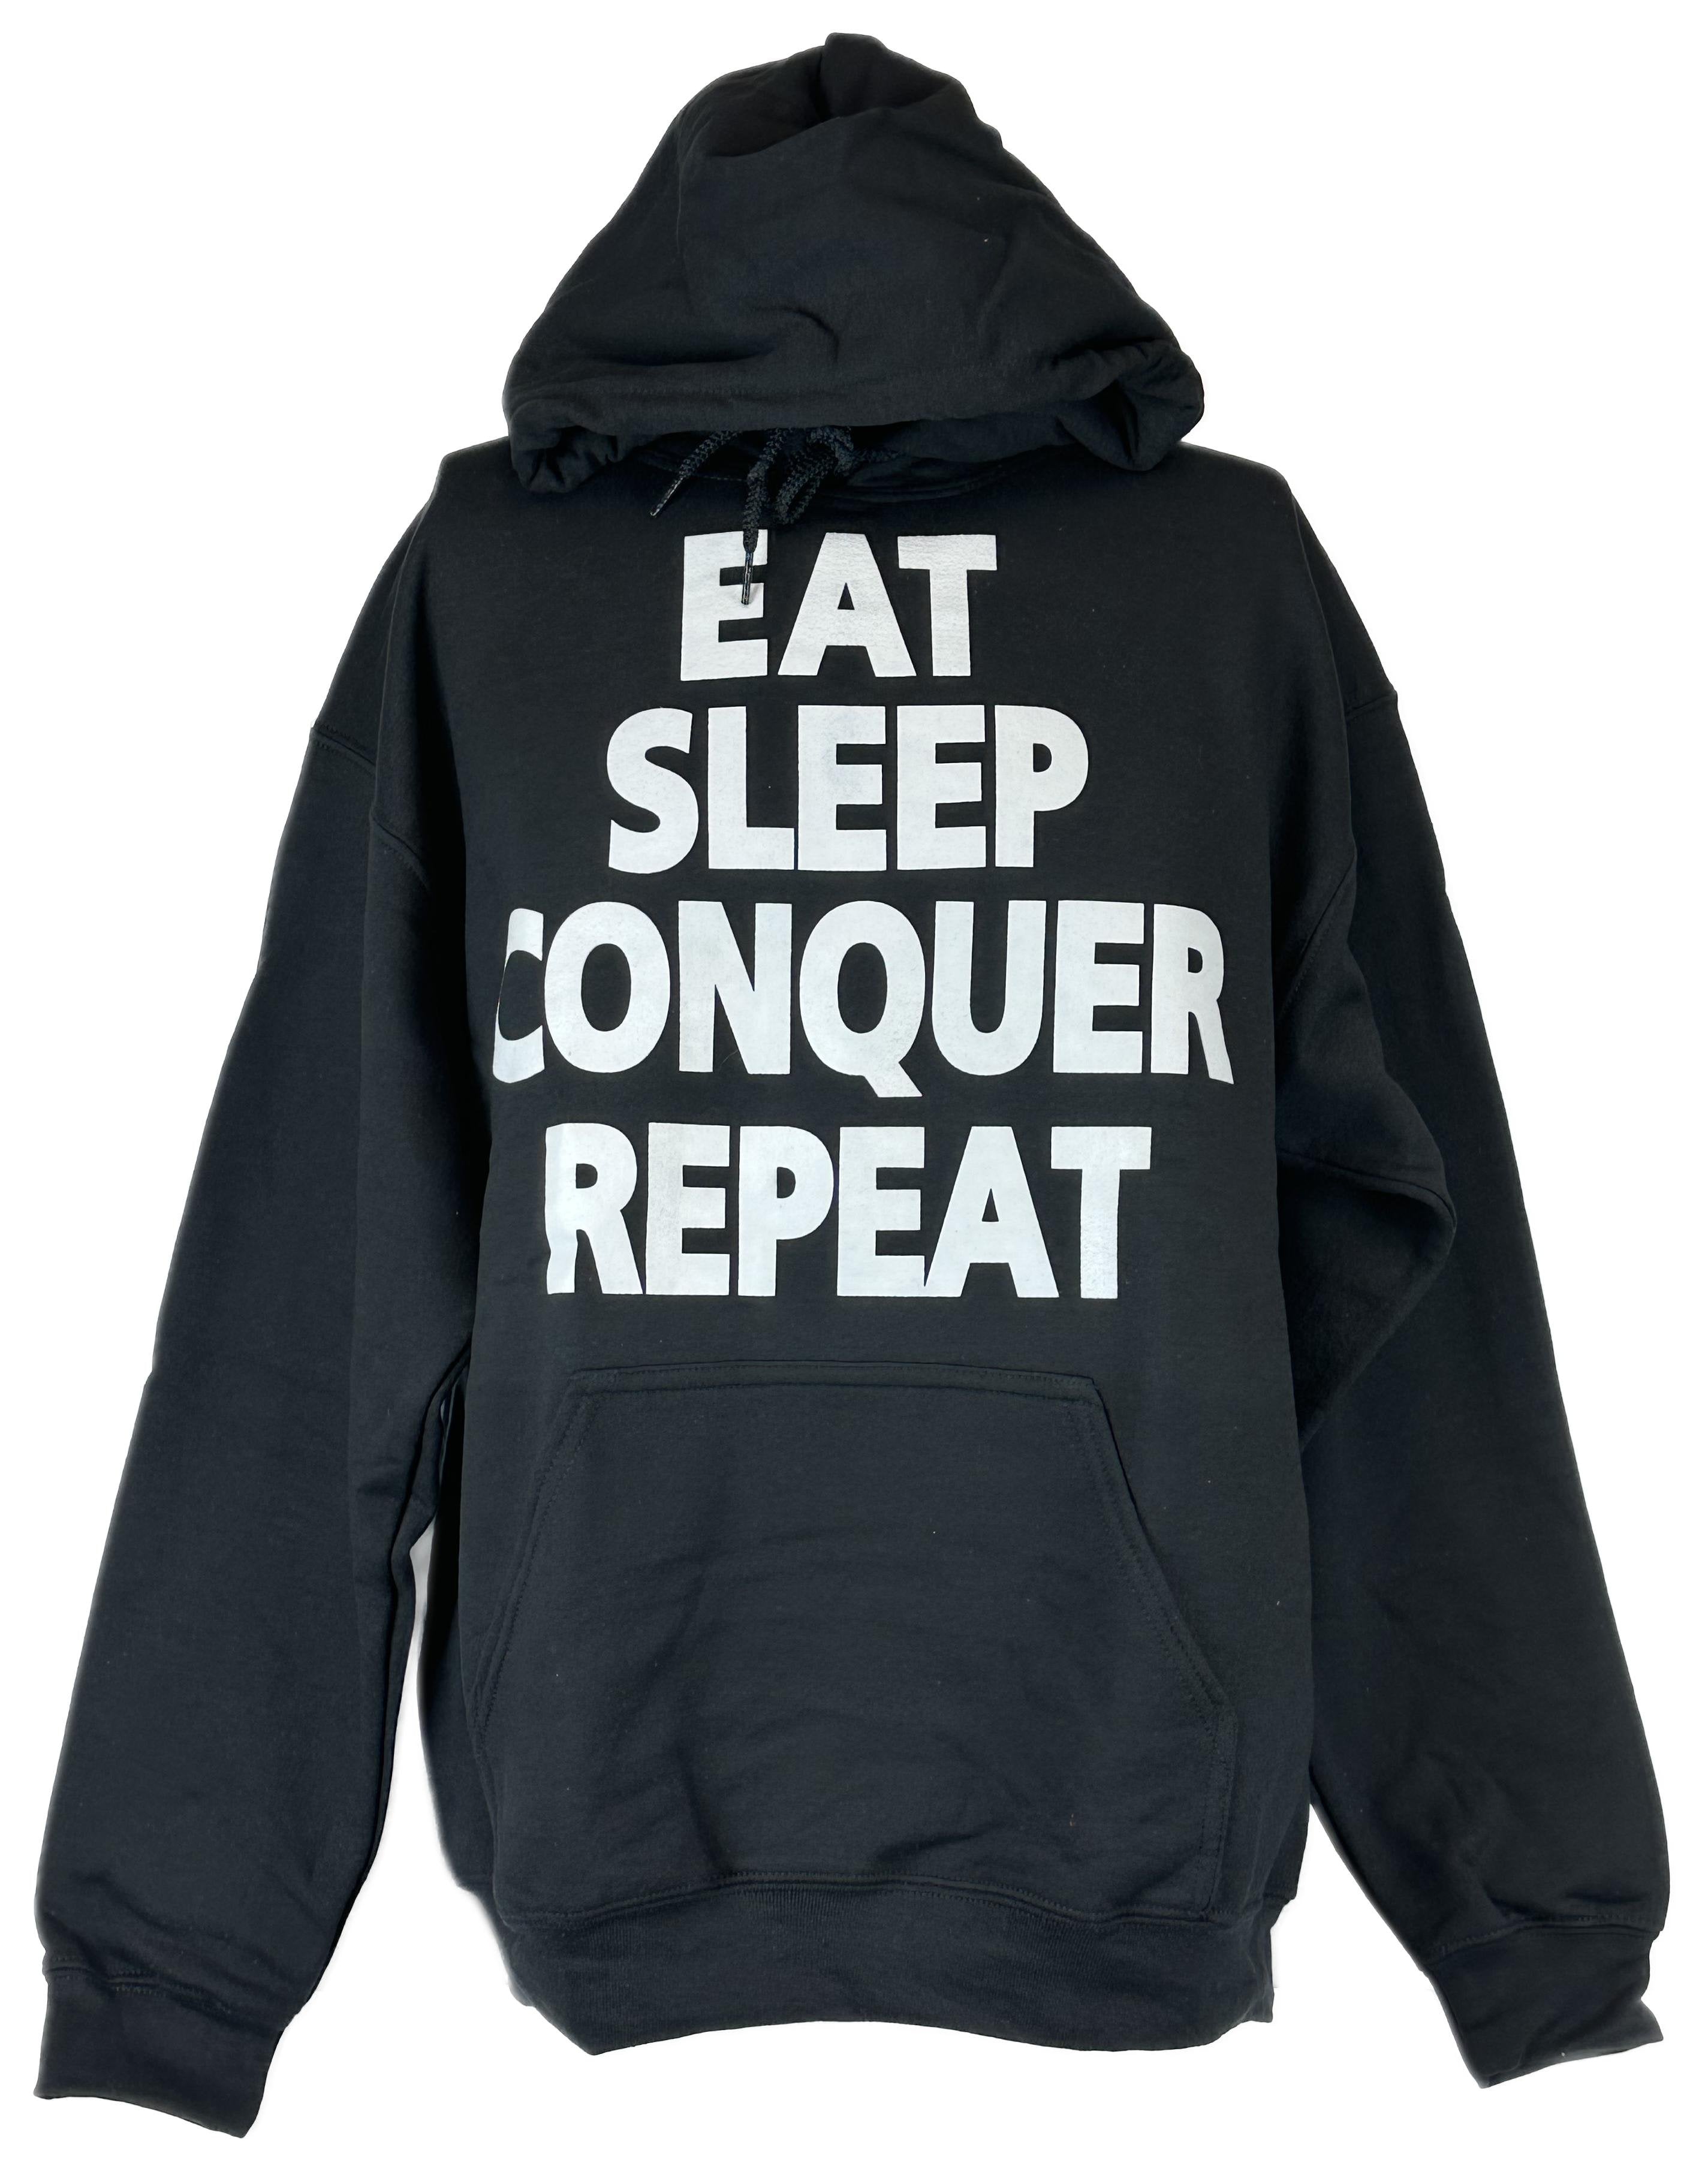 Brock Lesnar Eat Sleep Conquer Repeat Pullover Hoody Sweatshirt